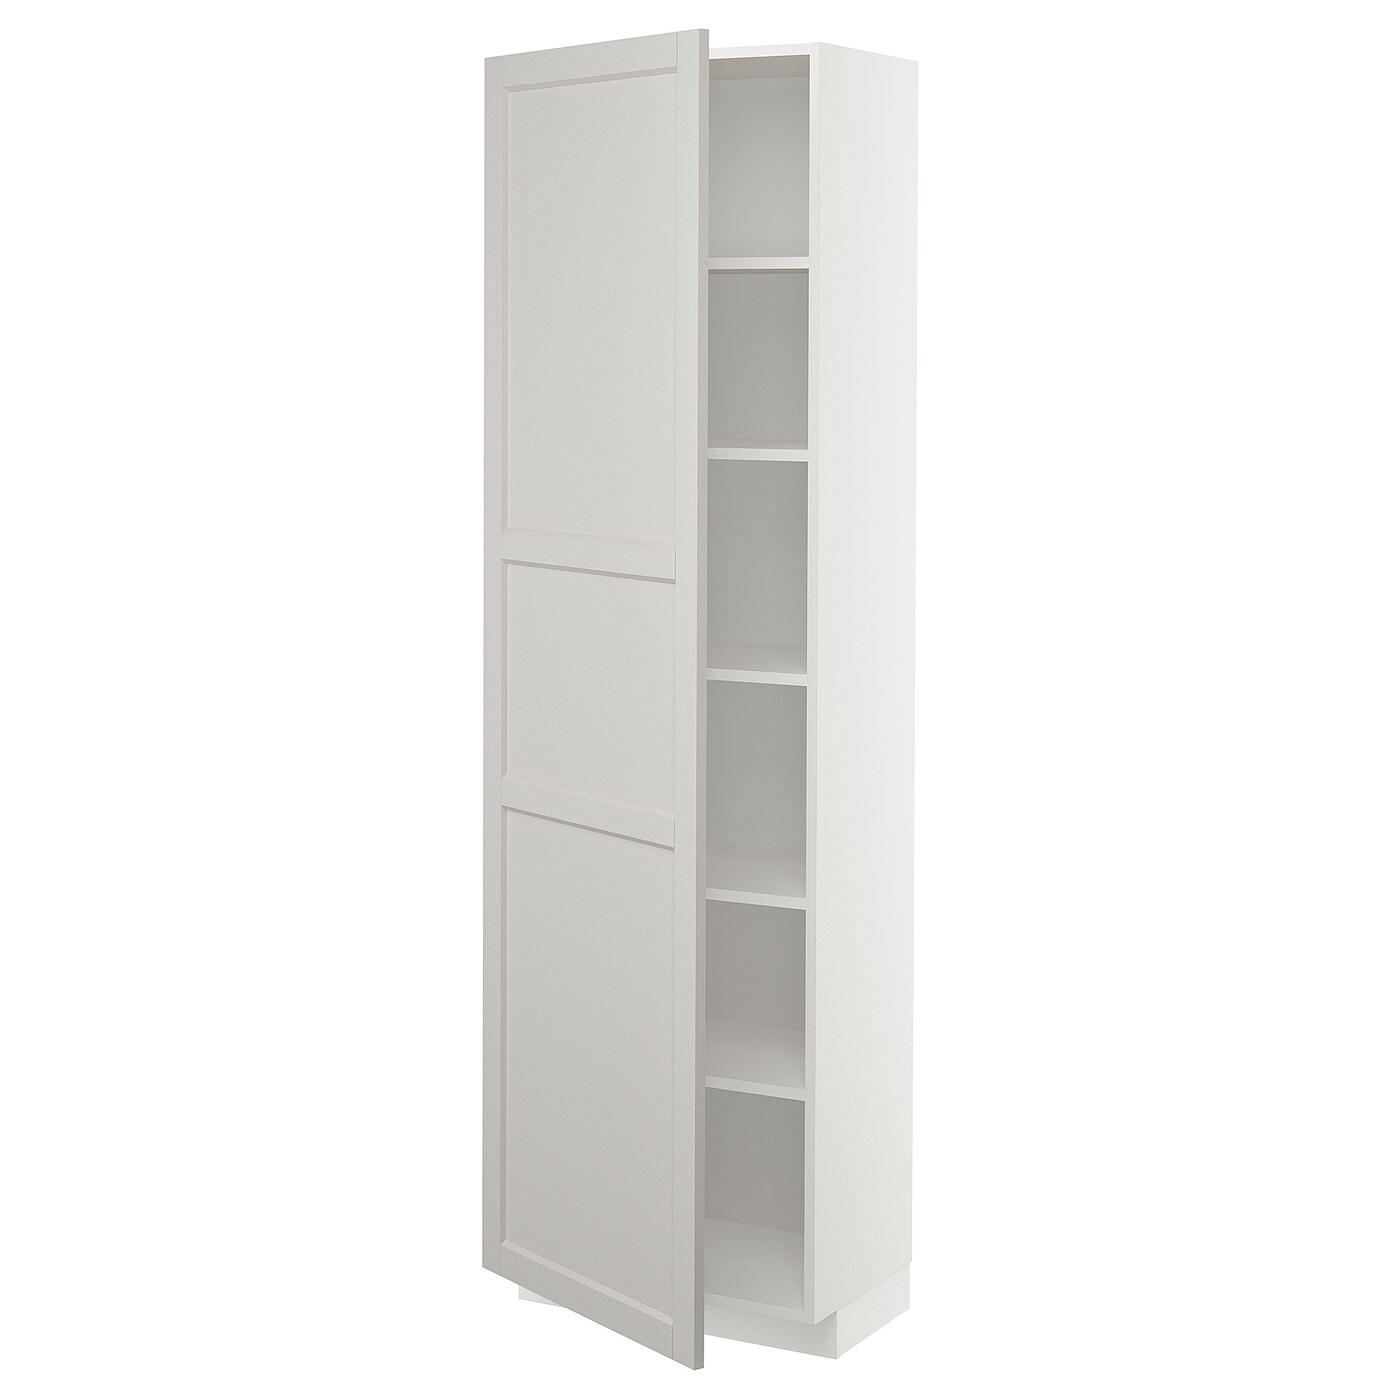 Высокий кухонный шкаф с полками - IKEA METOD/МЕТОД ИКЕА, 200х37х60 см, белый/серый